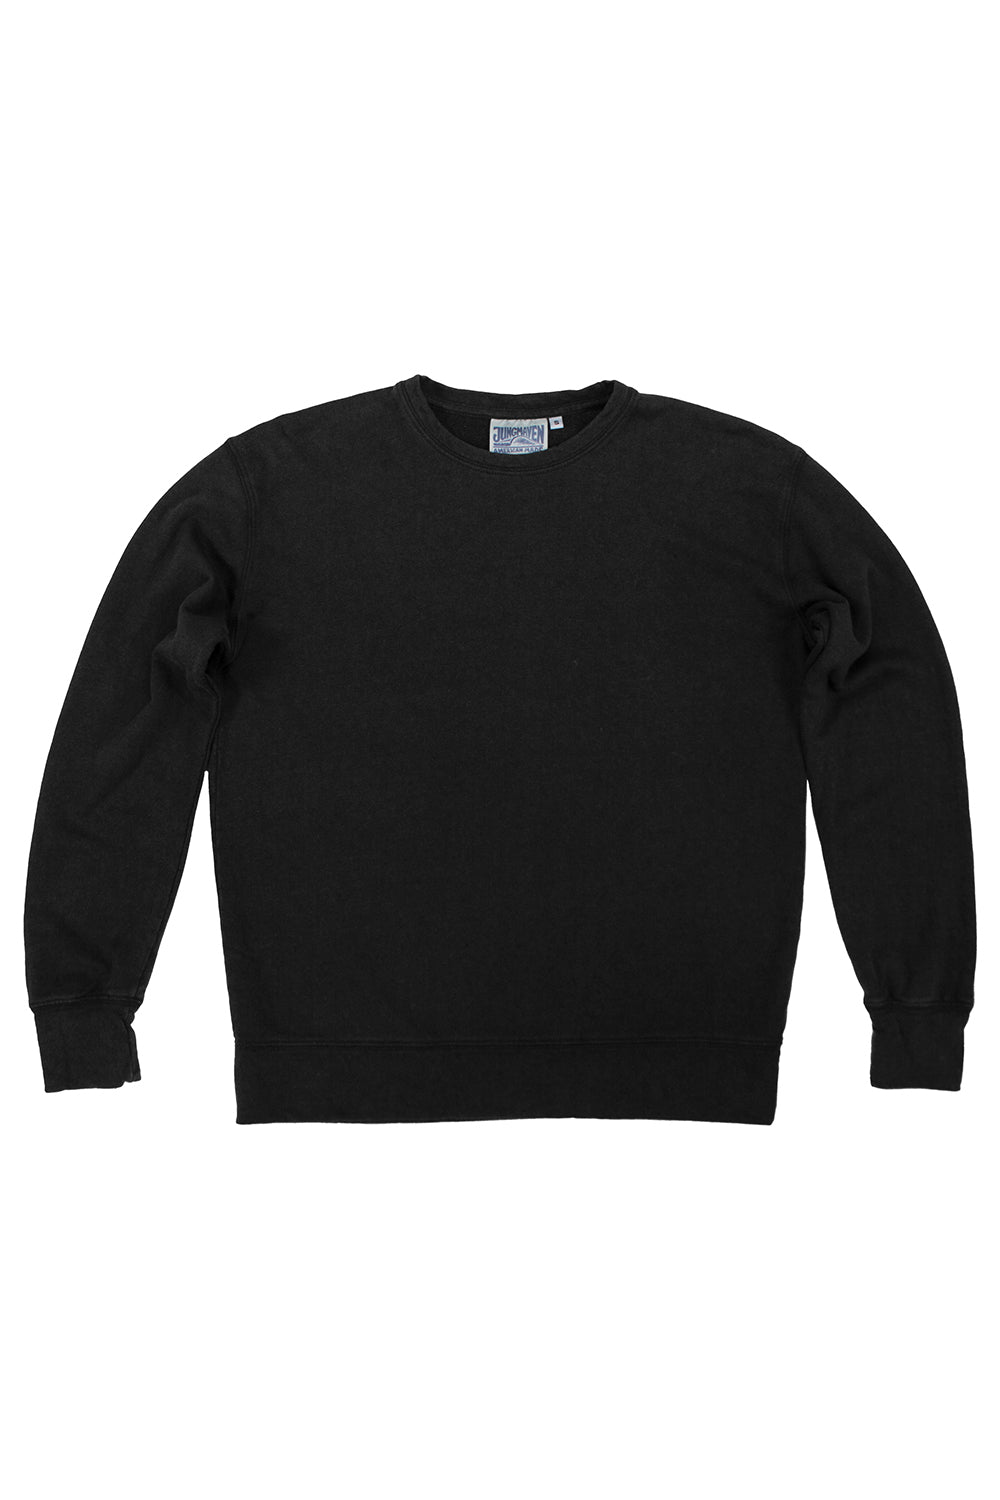 Tahoe Sweatshirt | Jungmaven Hemp Clothing & Accessories / Color: Black